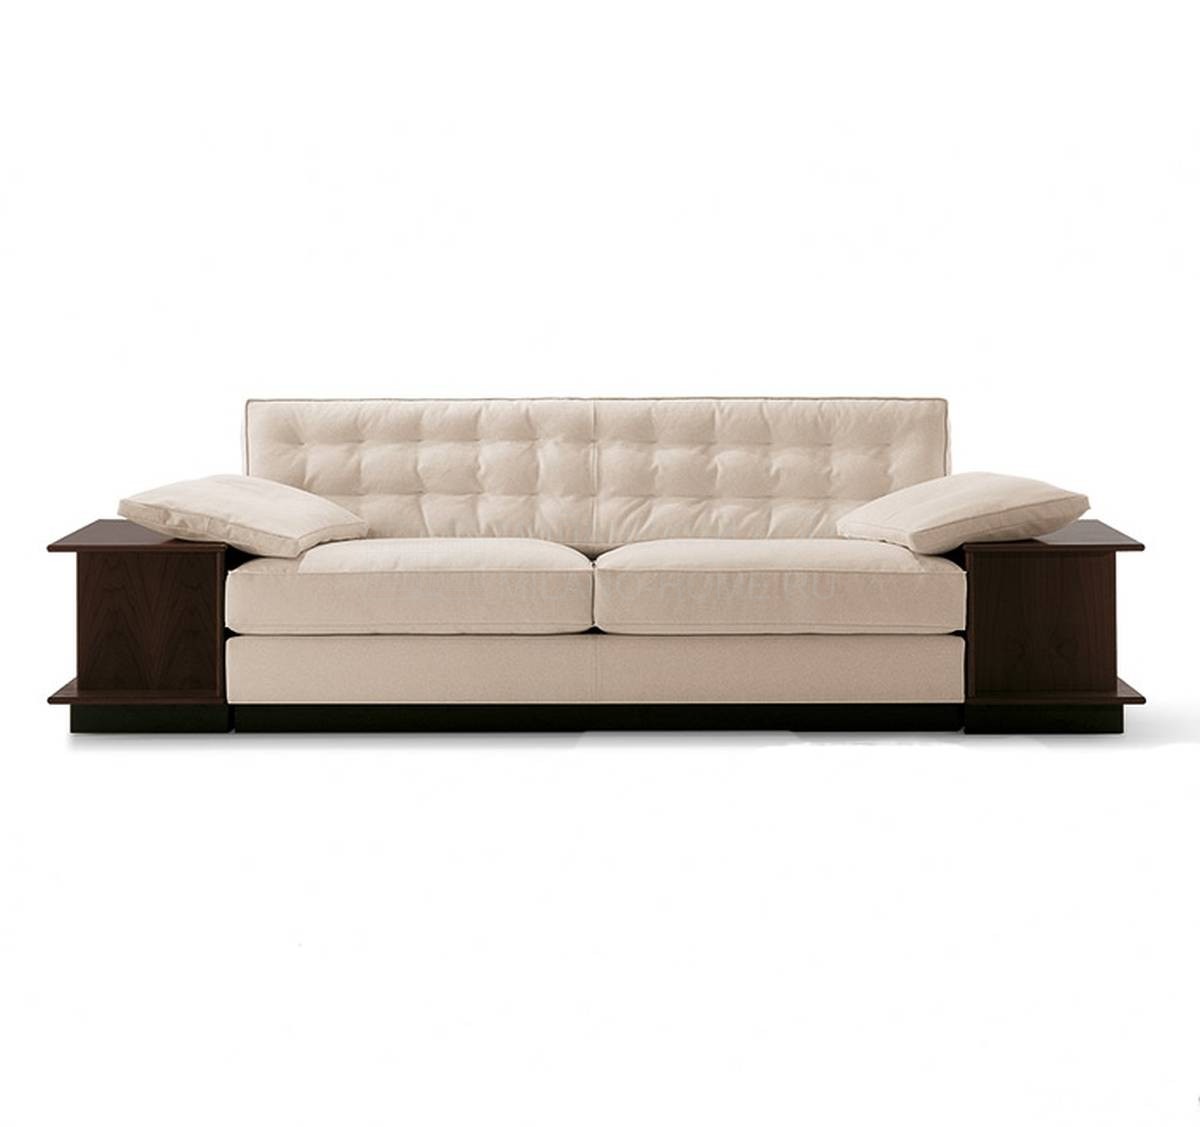 Прямой диван Royal / 68150-68054 из Италии фабрики GIORGETTI